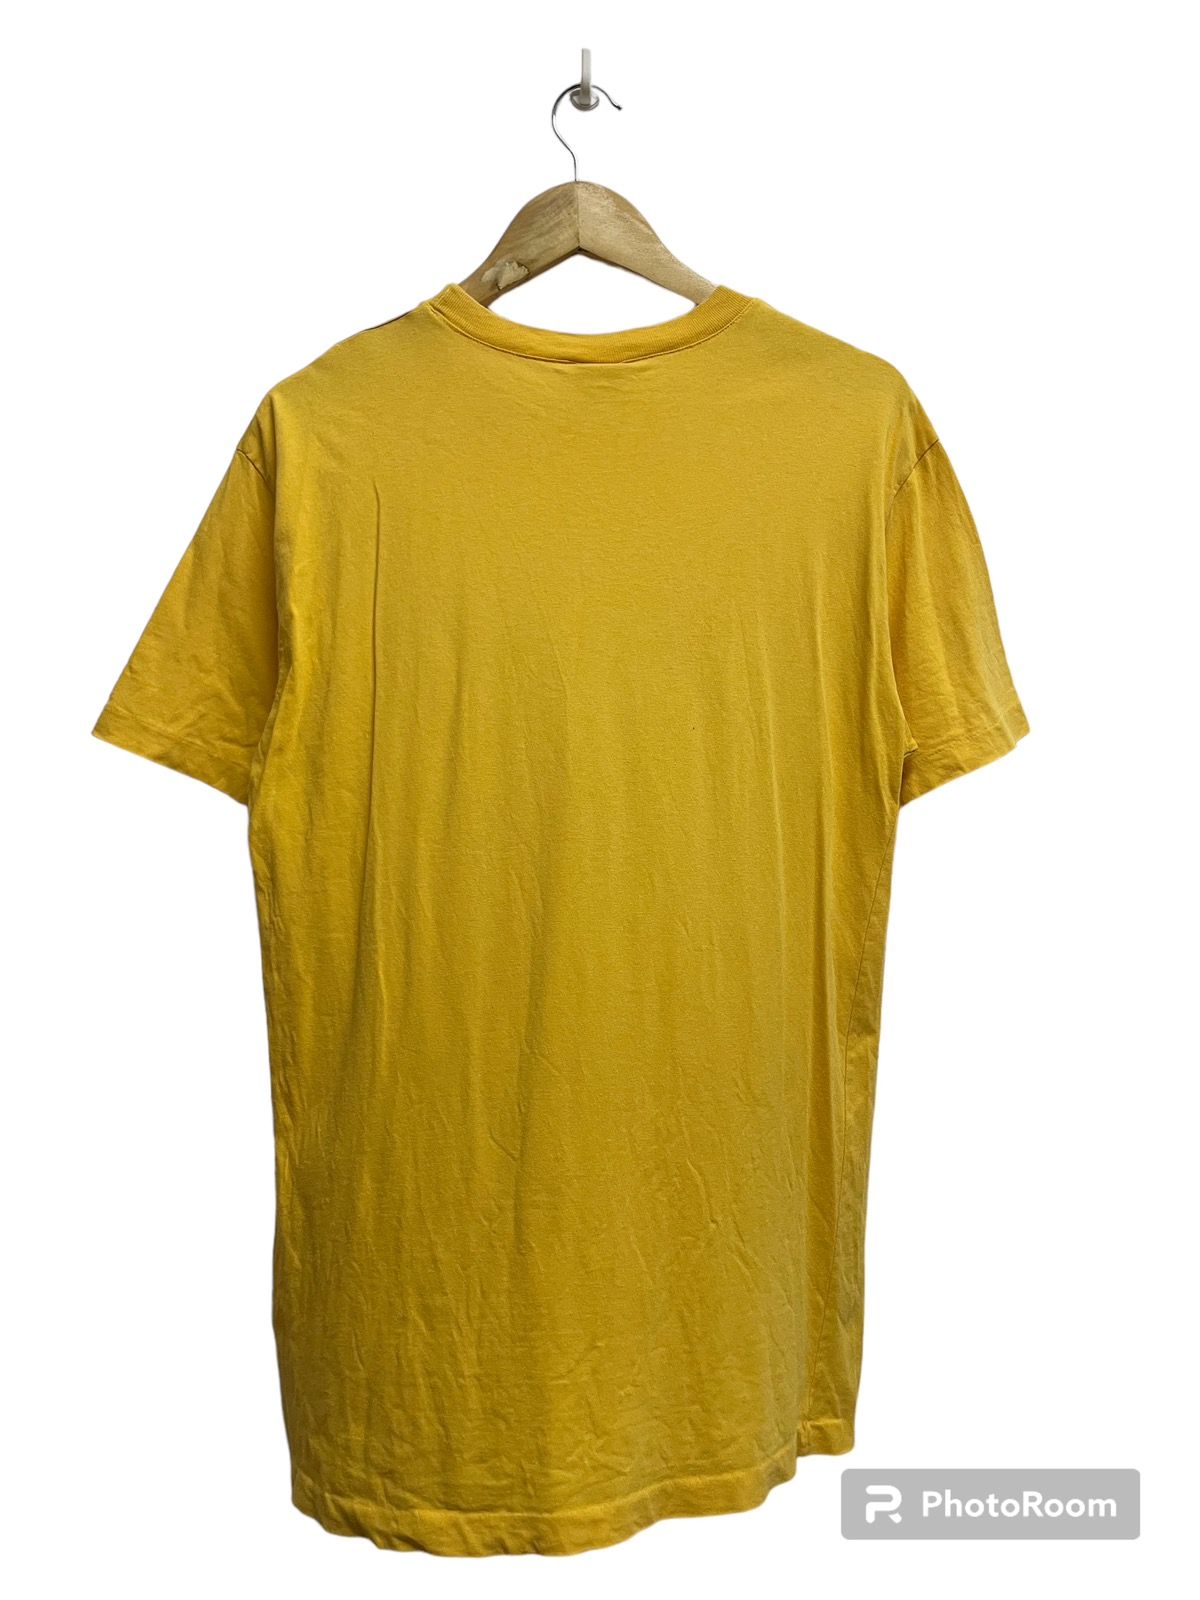 Vintage United Colors Of Benetton T shirt Size US M / EU 48-50 / 2 - 2 Preview